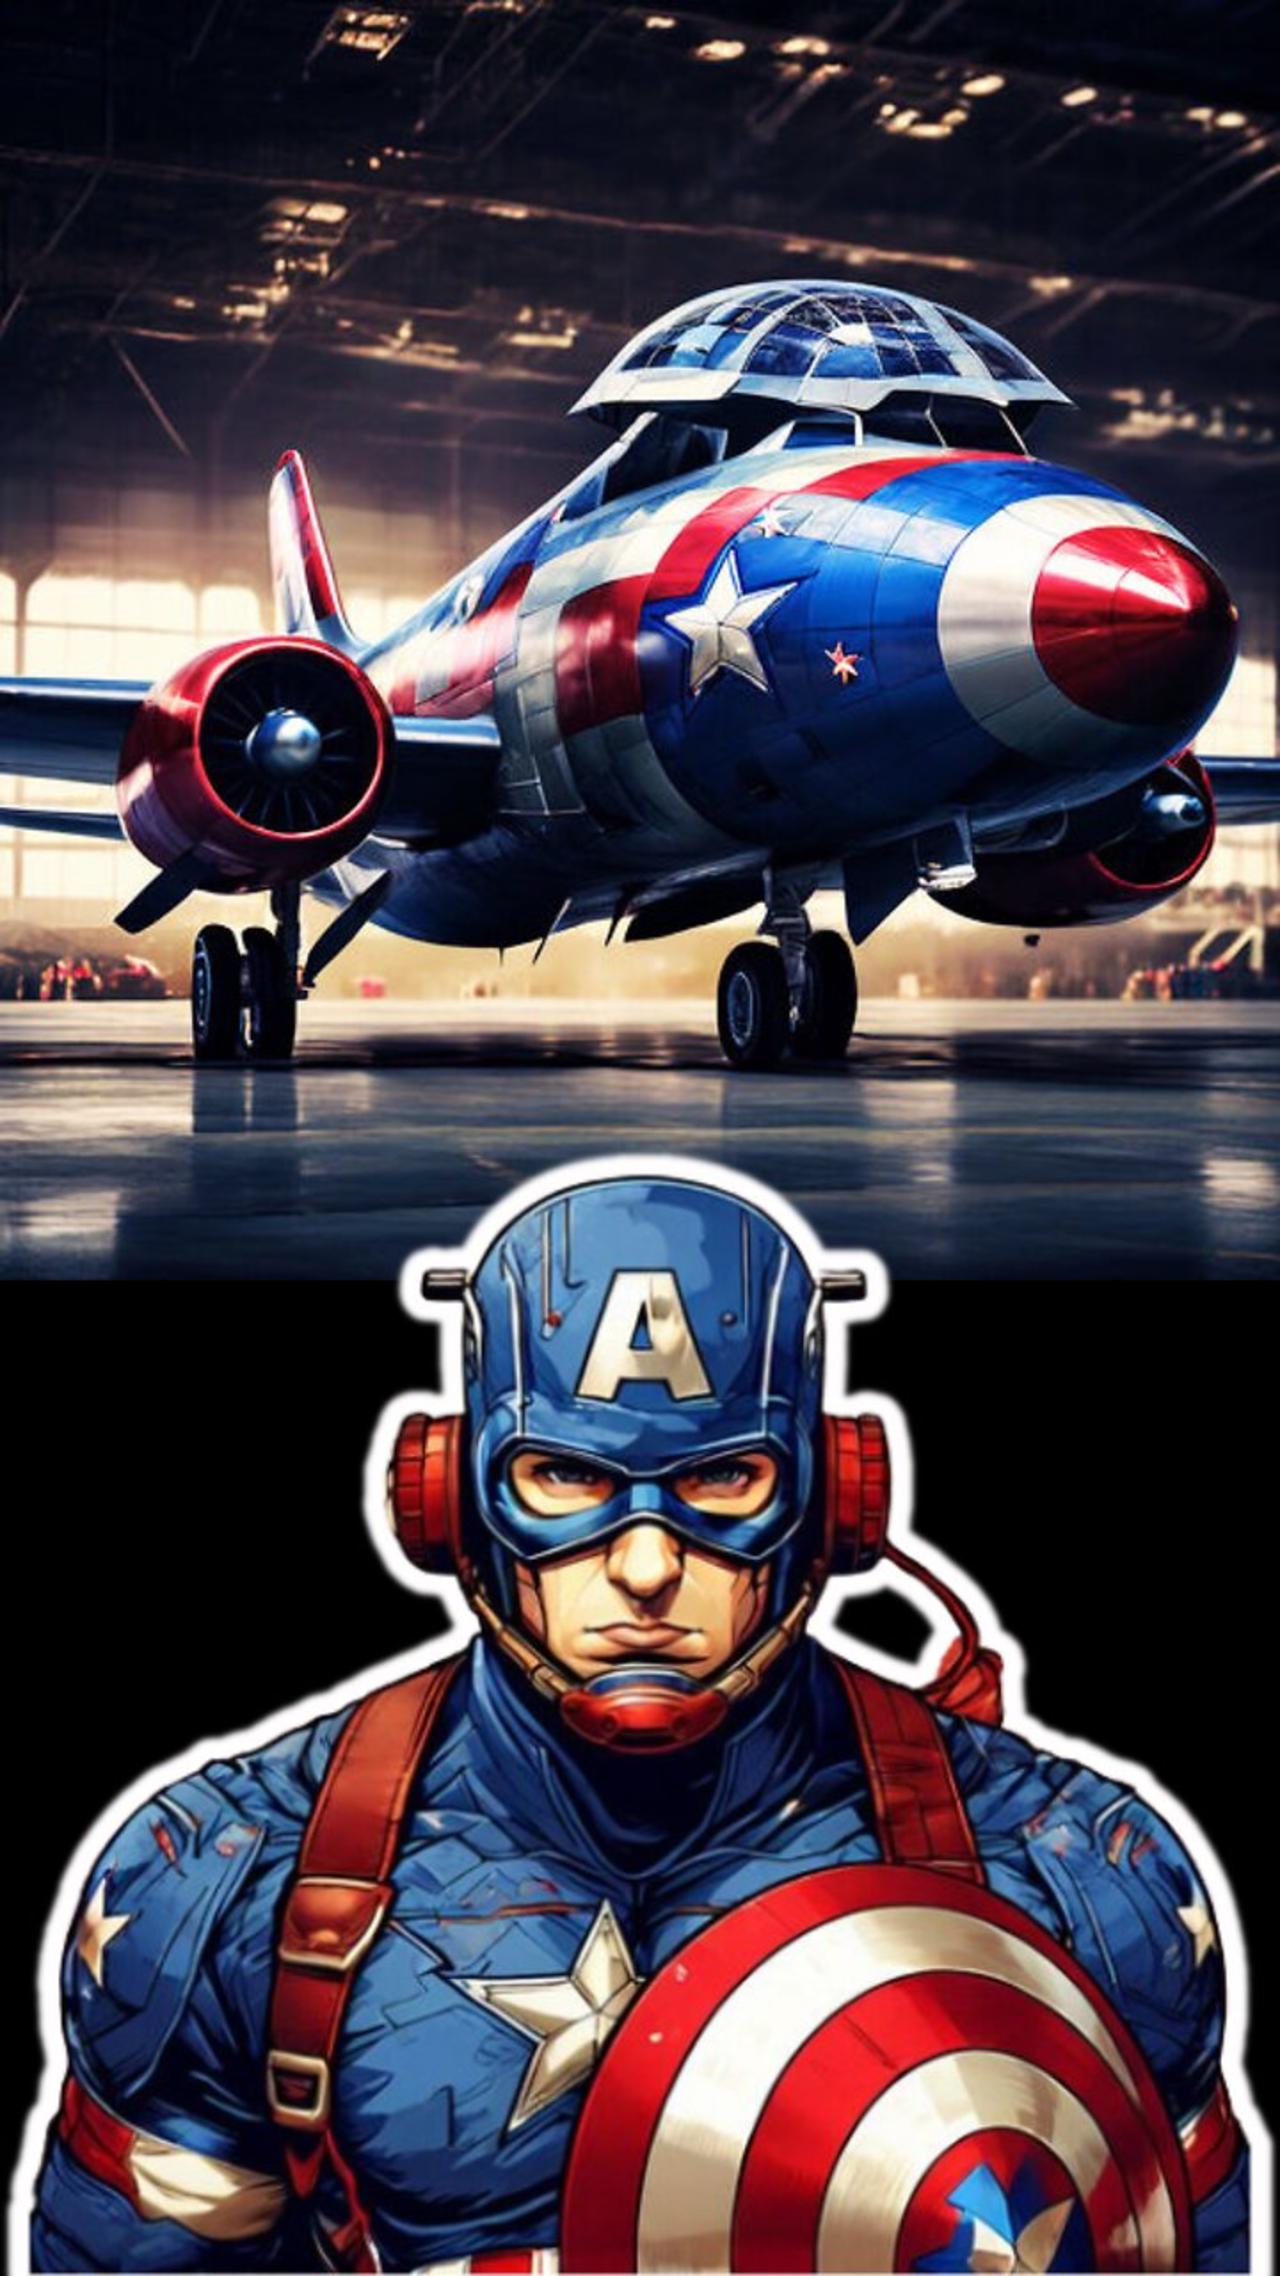 marvel and dc superhero but airplane version #marvel #dc #superhero #trending